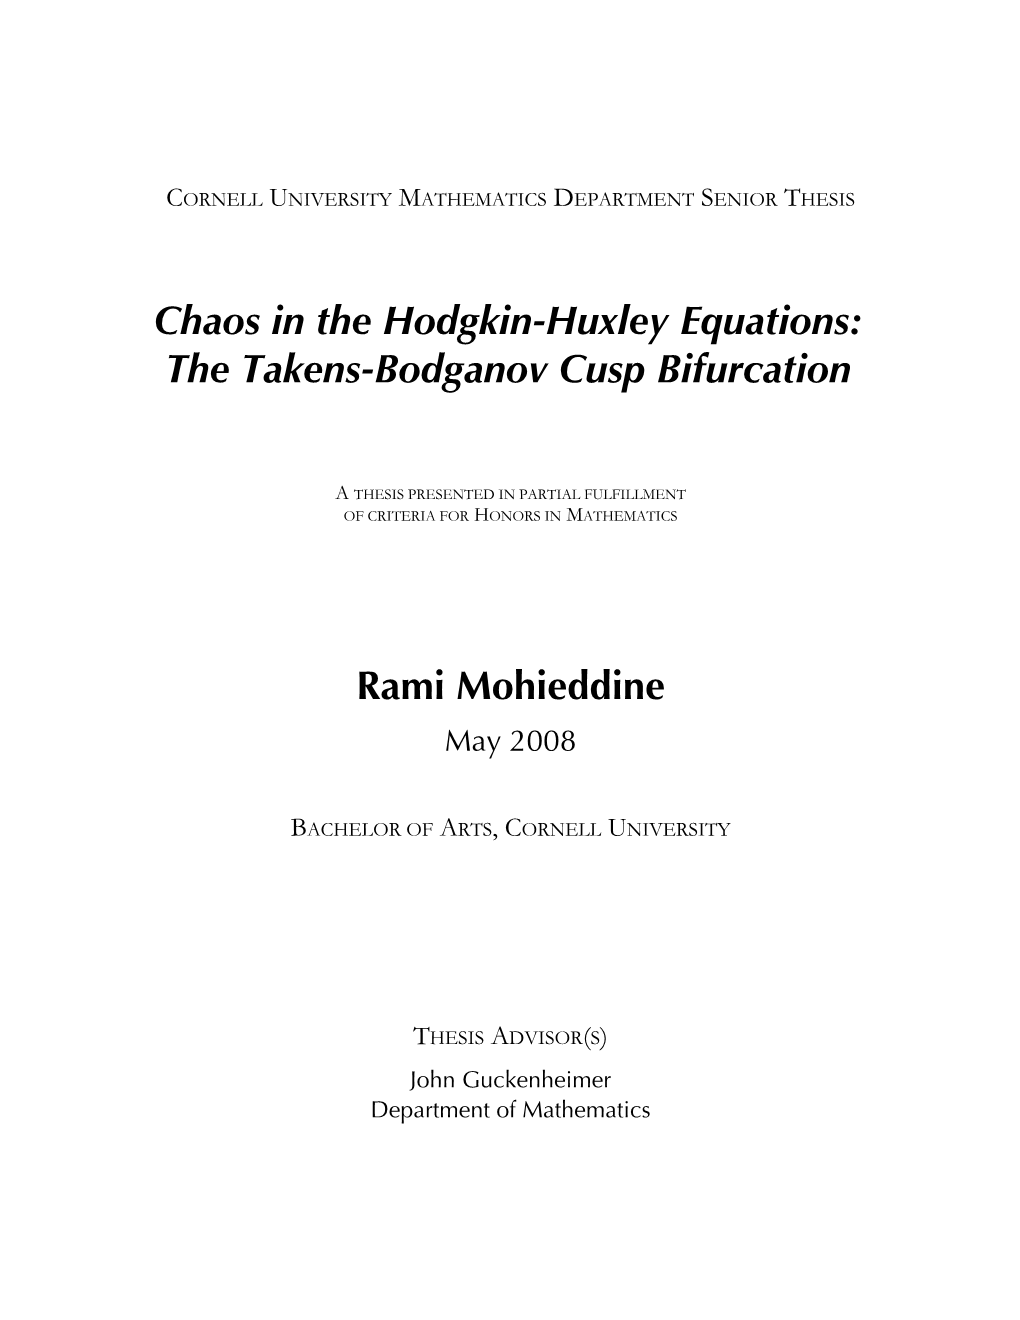 Chaos in the Hodgkin-Huxley Equations: the Takens-Bodganov Cusp Bifurcation